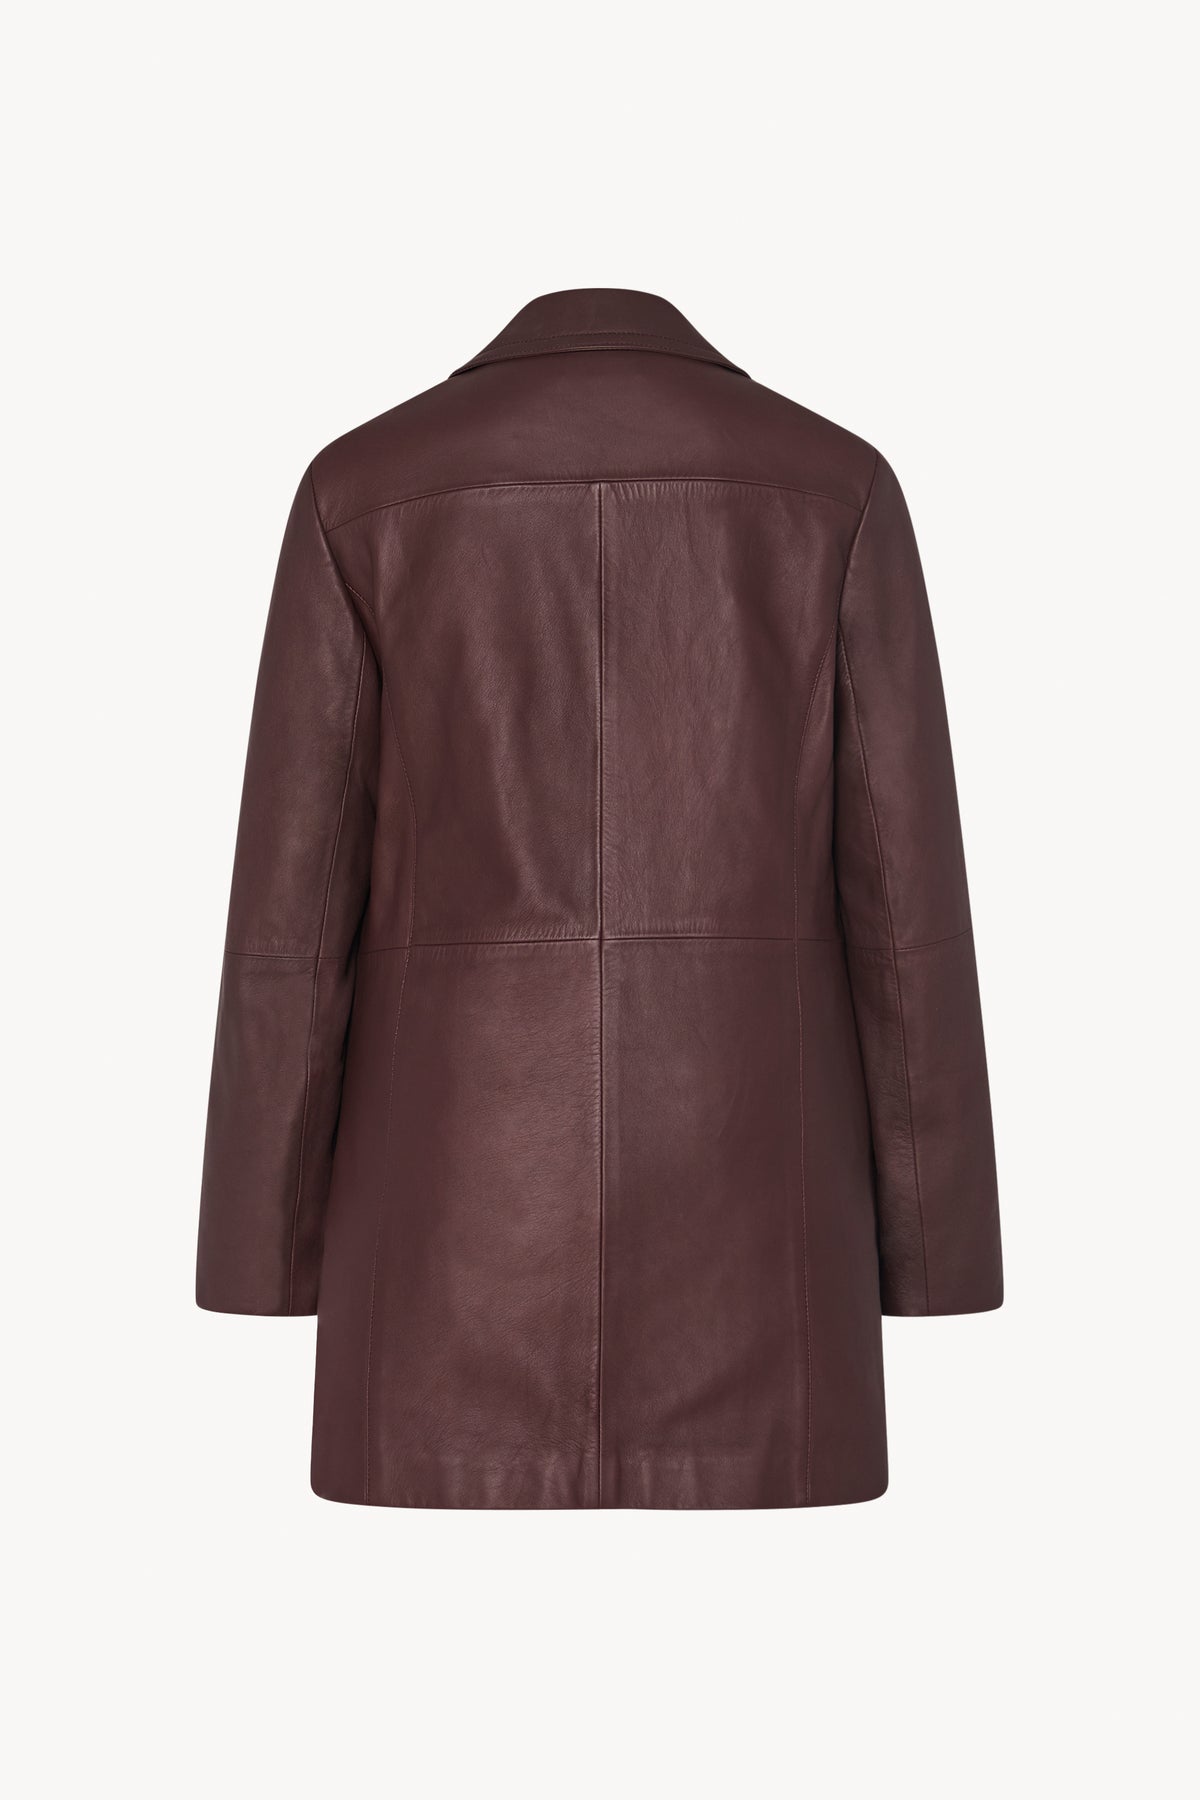 Georgie Coat in Leather